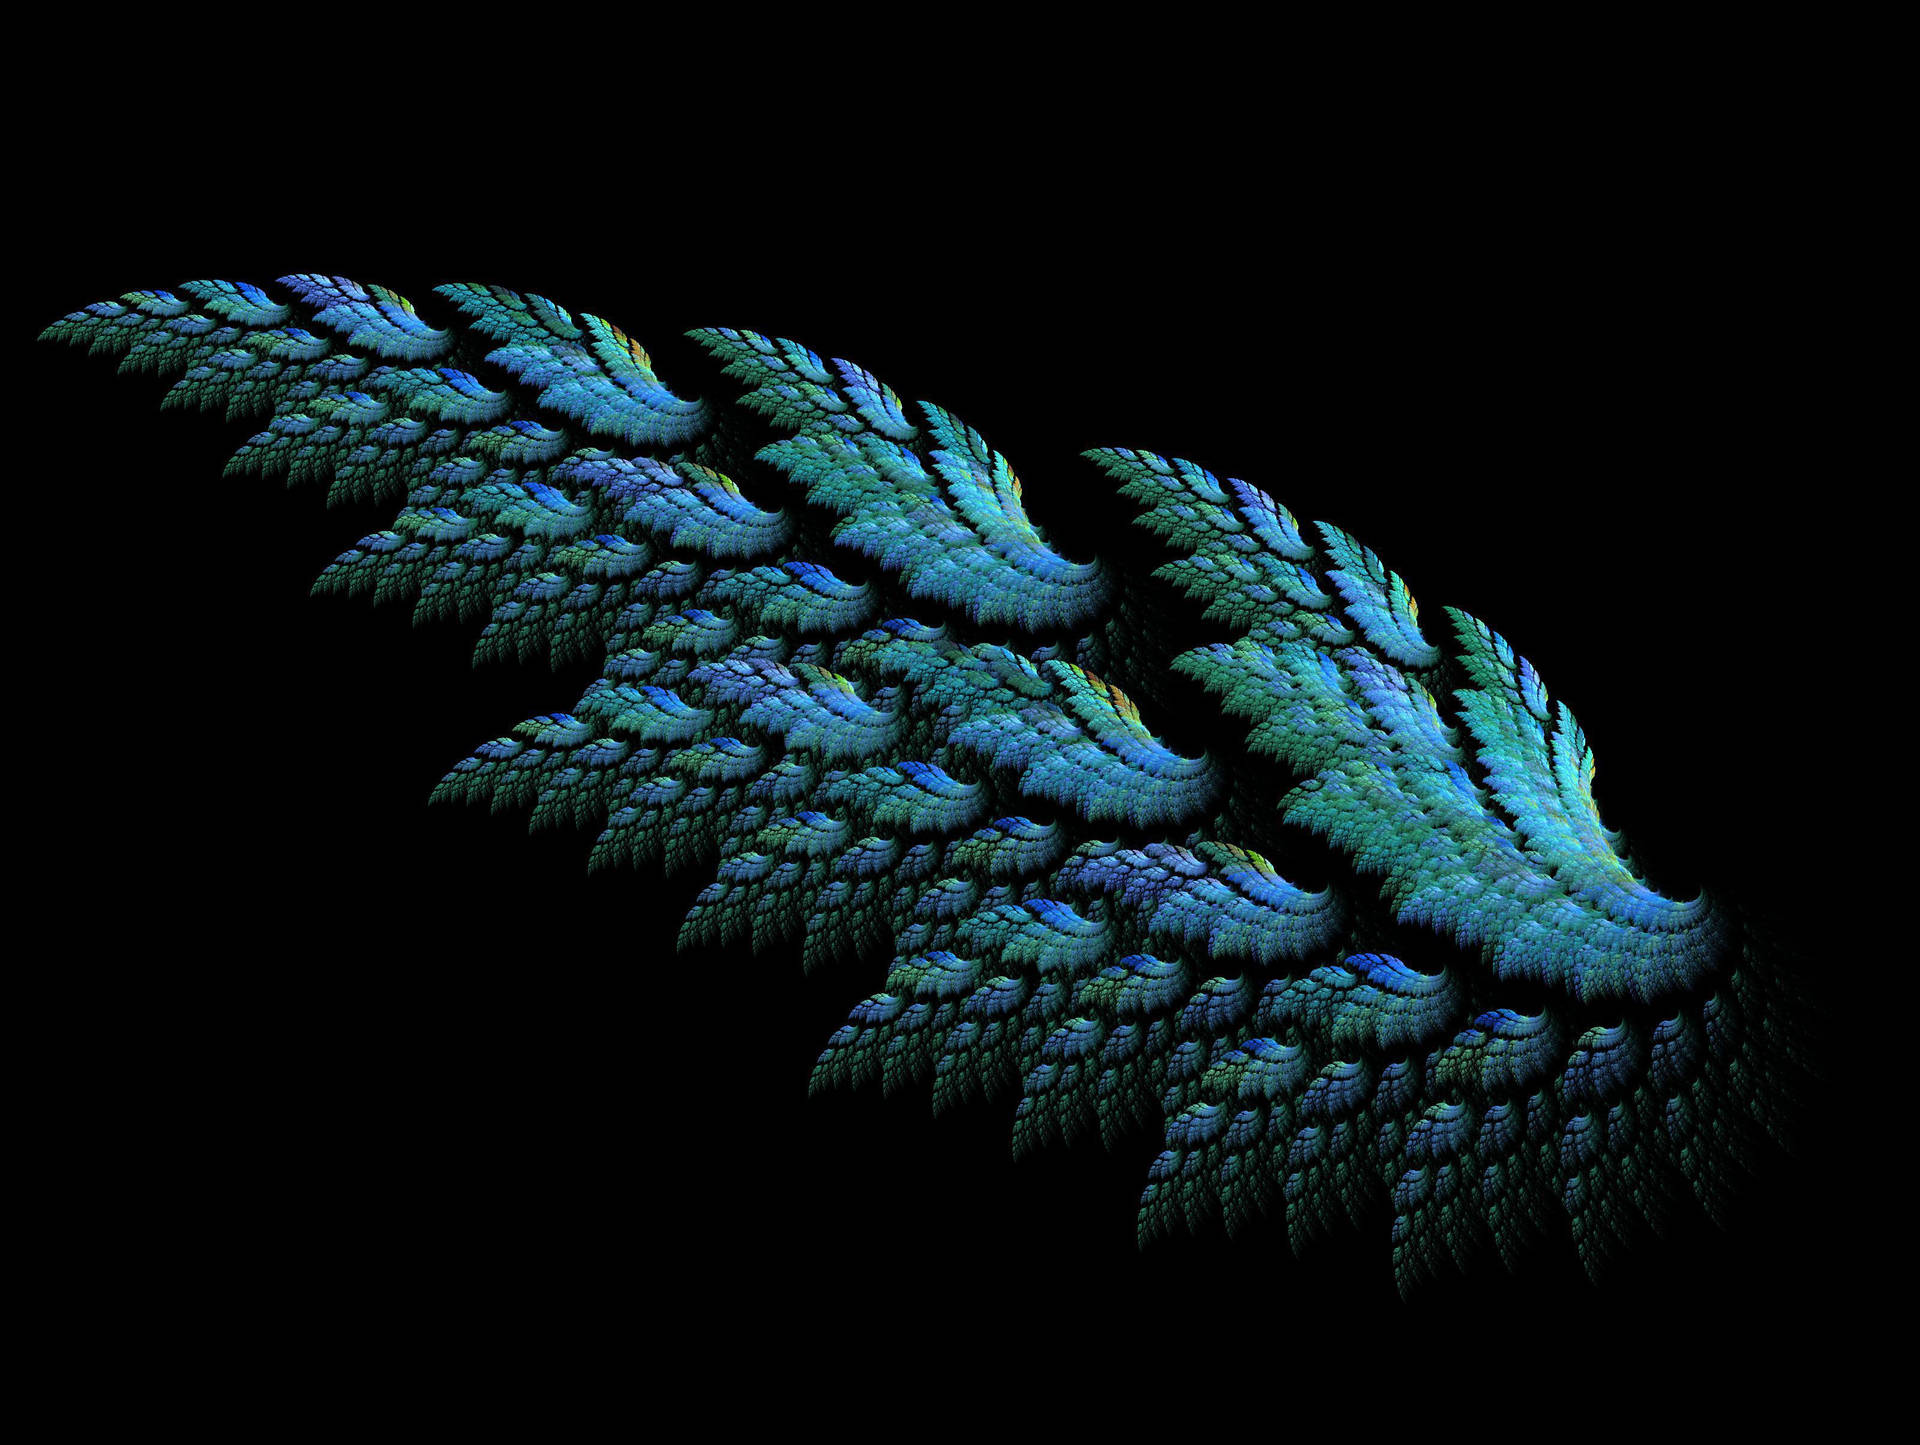 Peacock-Like Wings Wallpaper